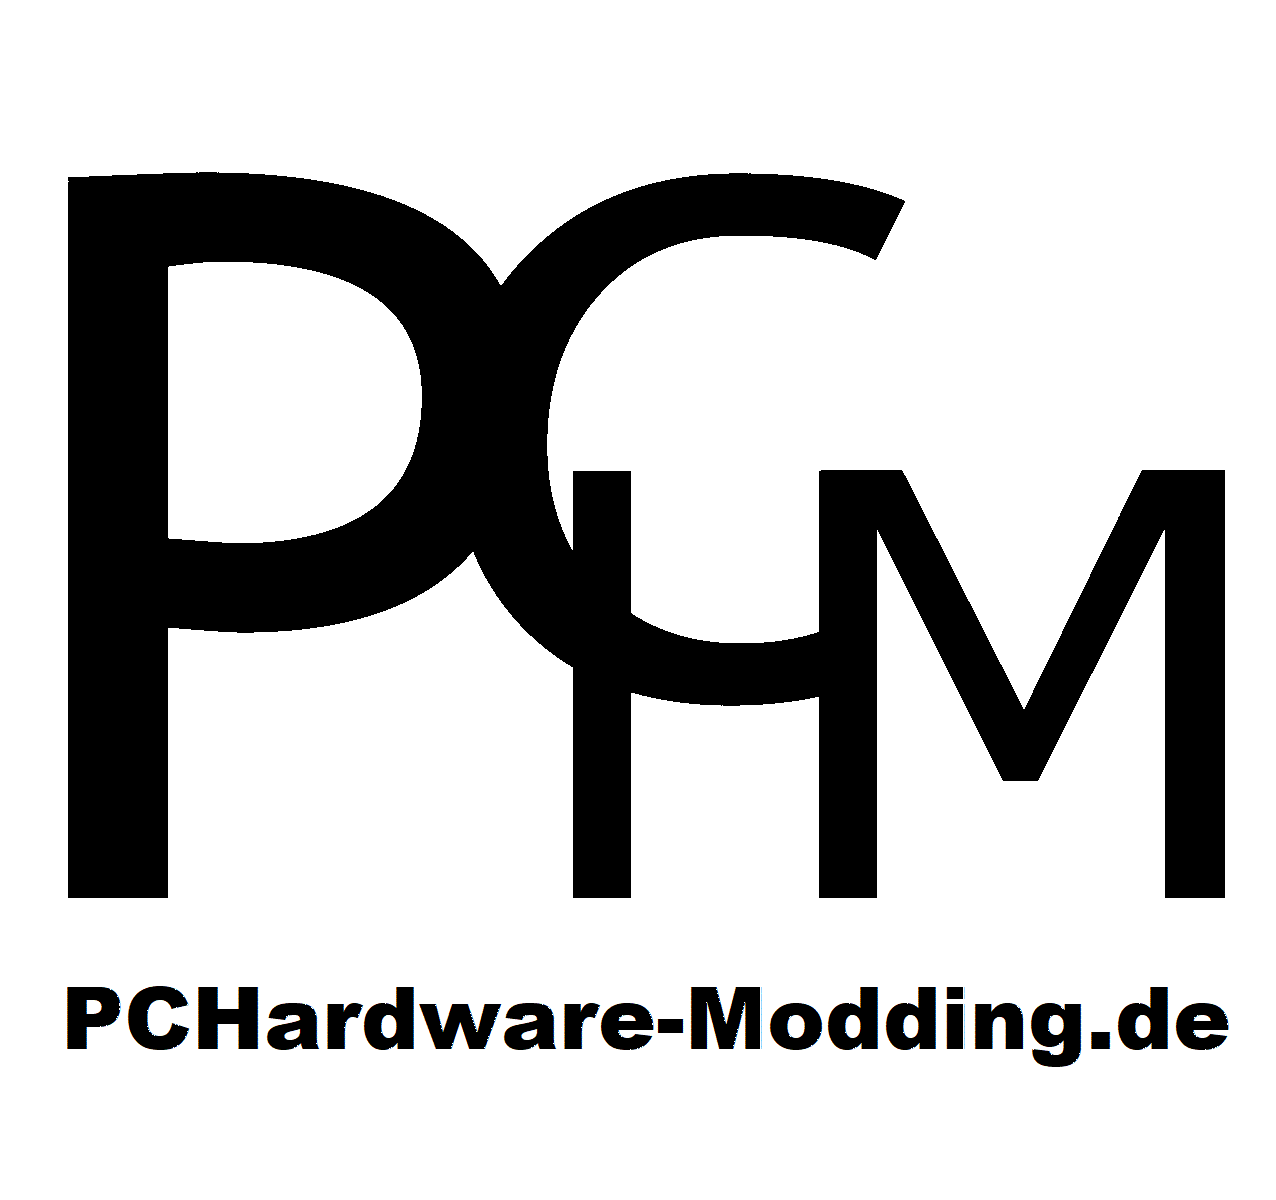 PC Hardware & Modding